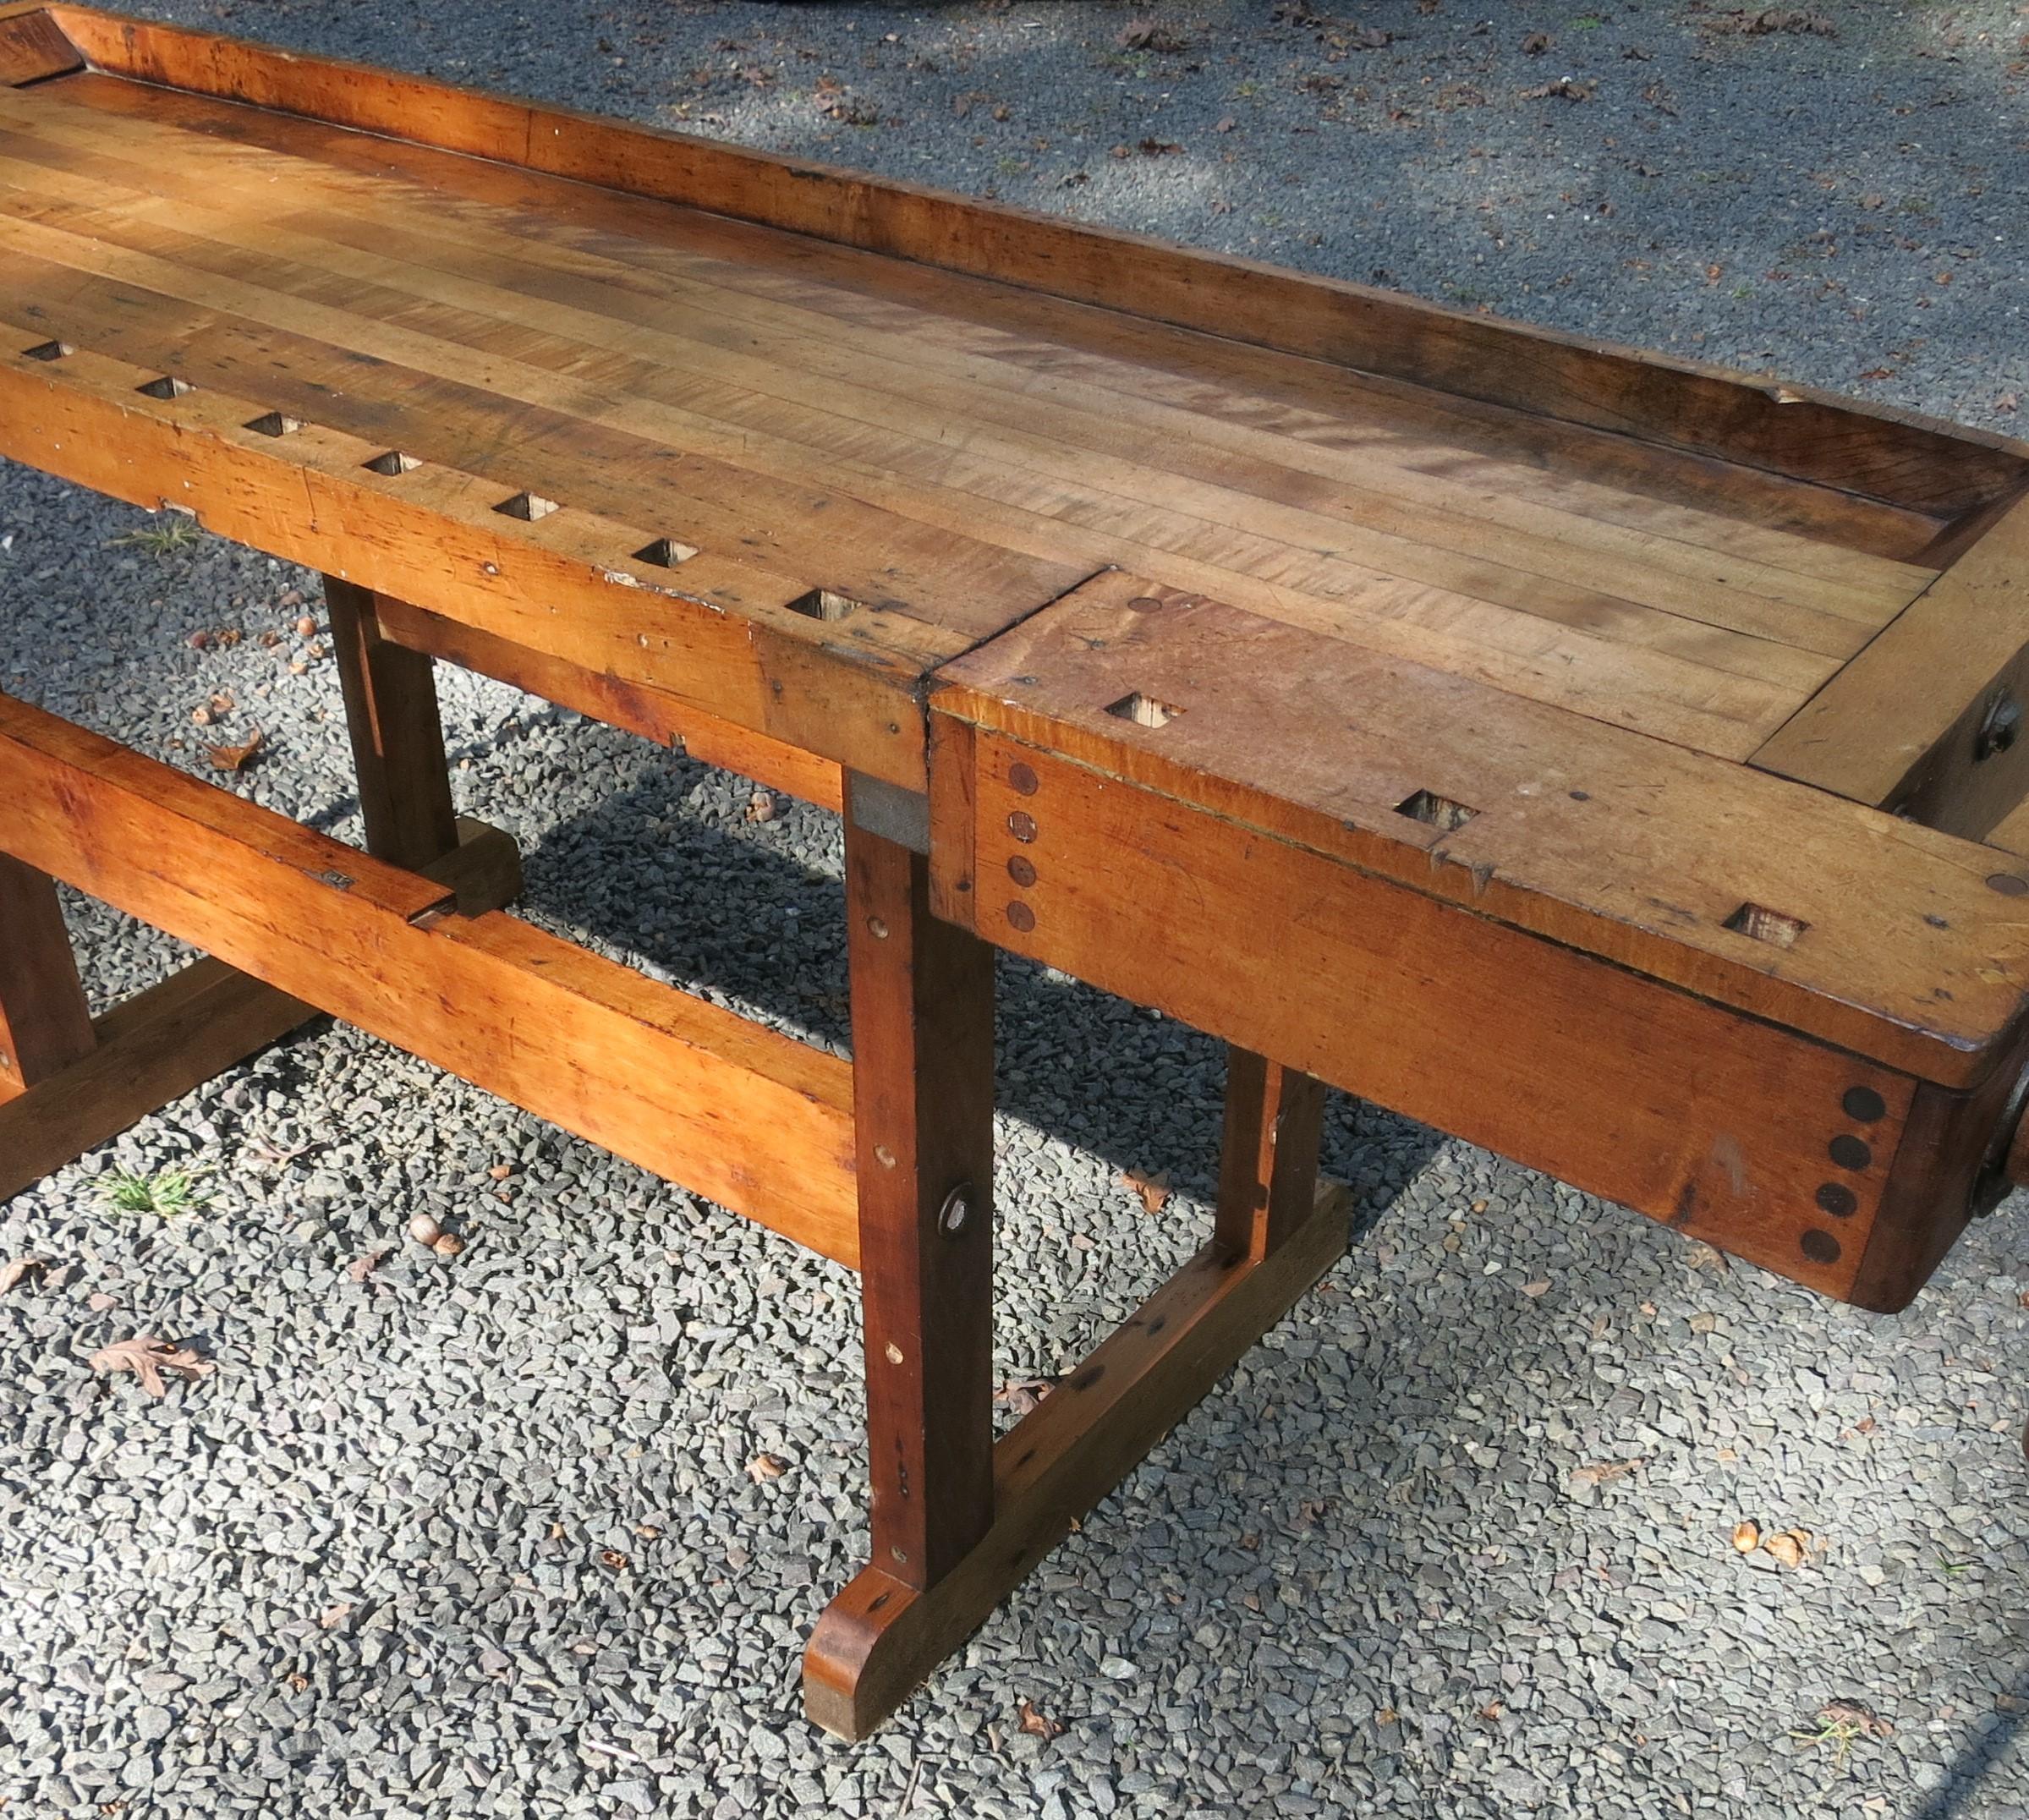 Wood Antique Workbench Industrial Table Hammacher Schlemmer, circa 1900